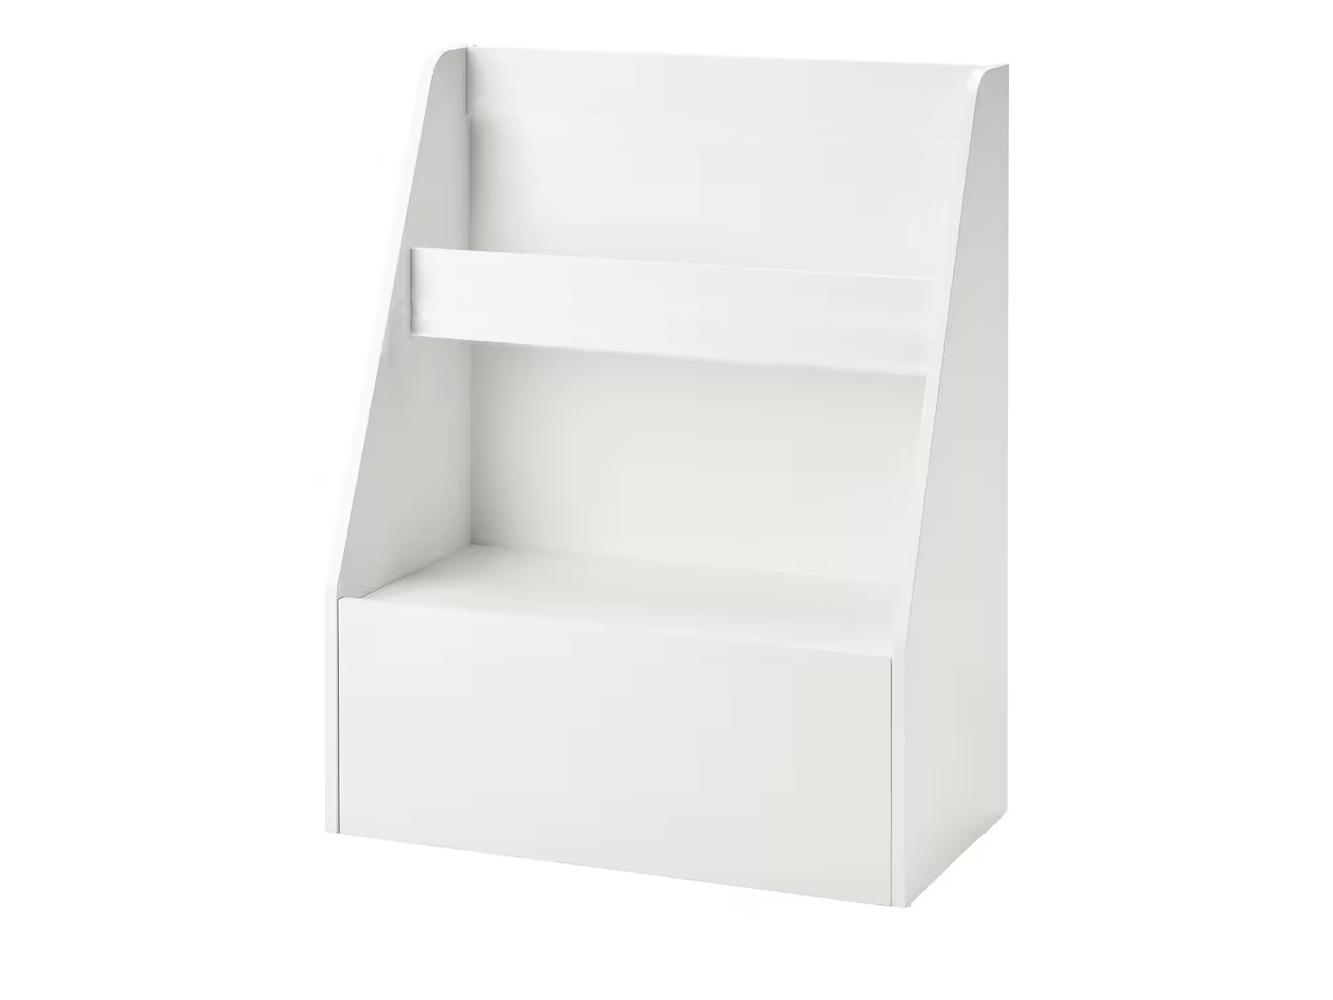  Стеллаж Бергиг 13 white ИКЕА (IKEA)  изображение товара